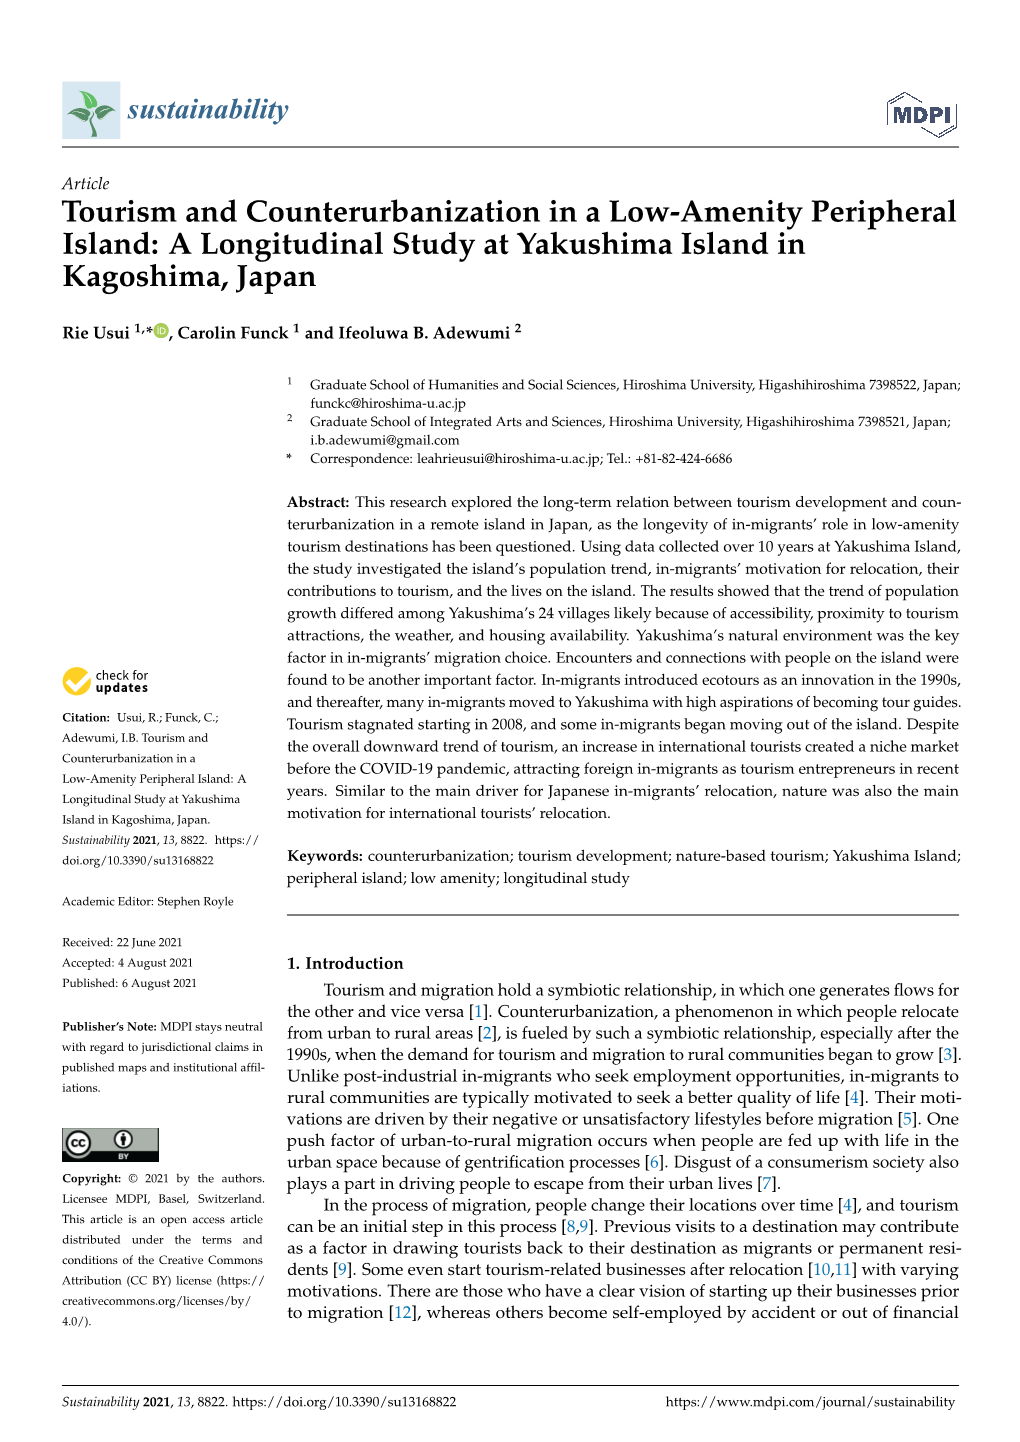 Tourism and Counterurbanization in a Low-Amenity Peripheral Island: a Longitudinal Study at Yakushima Island in Kagoshima, Japan